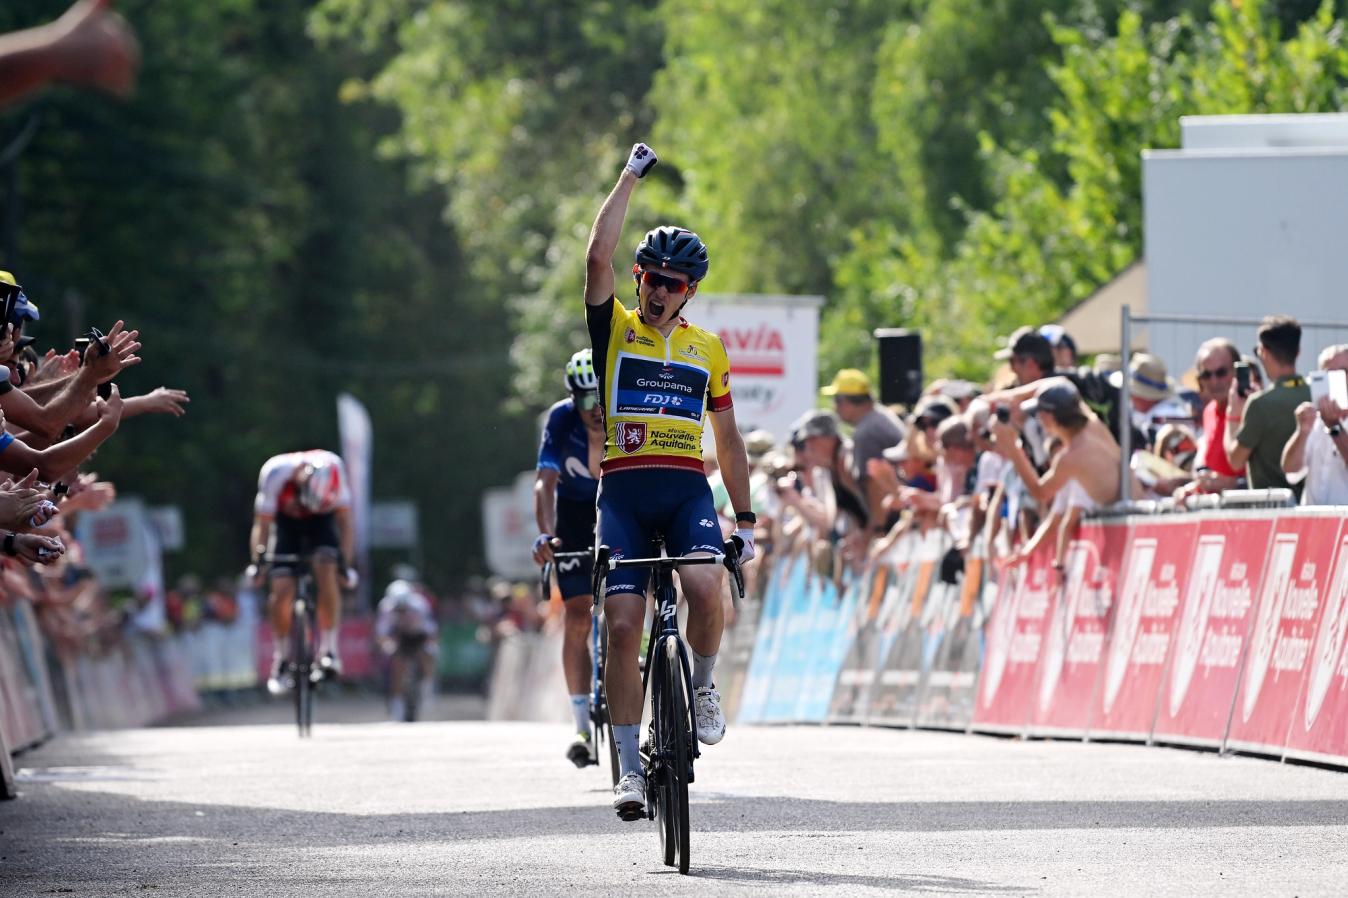 Romain Grégoire won the Tour du Limousin for Groupama-FDJ as part of his Vuelta preparation